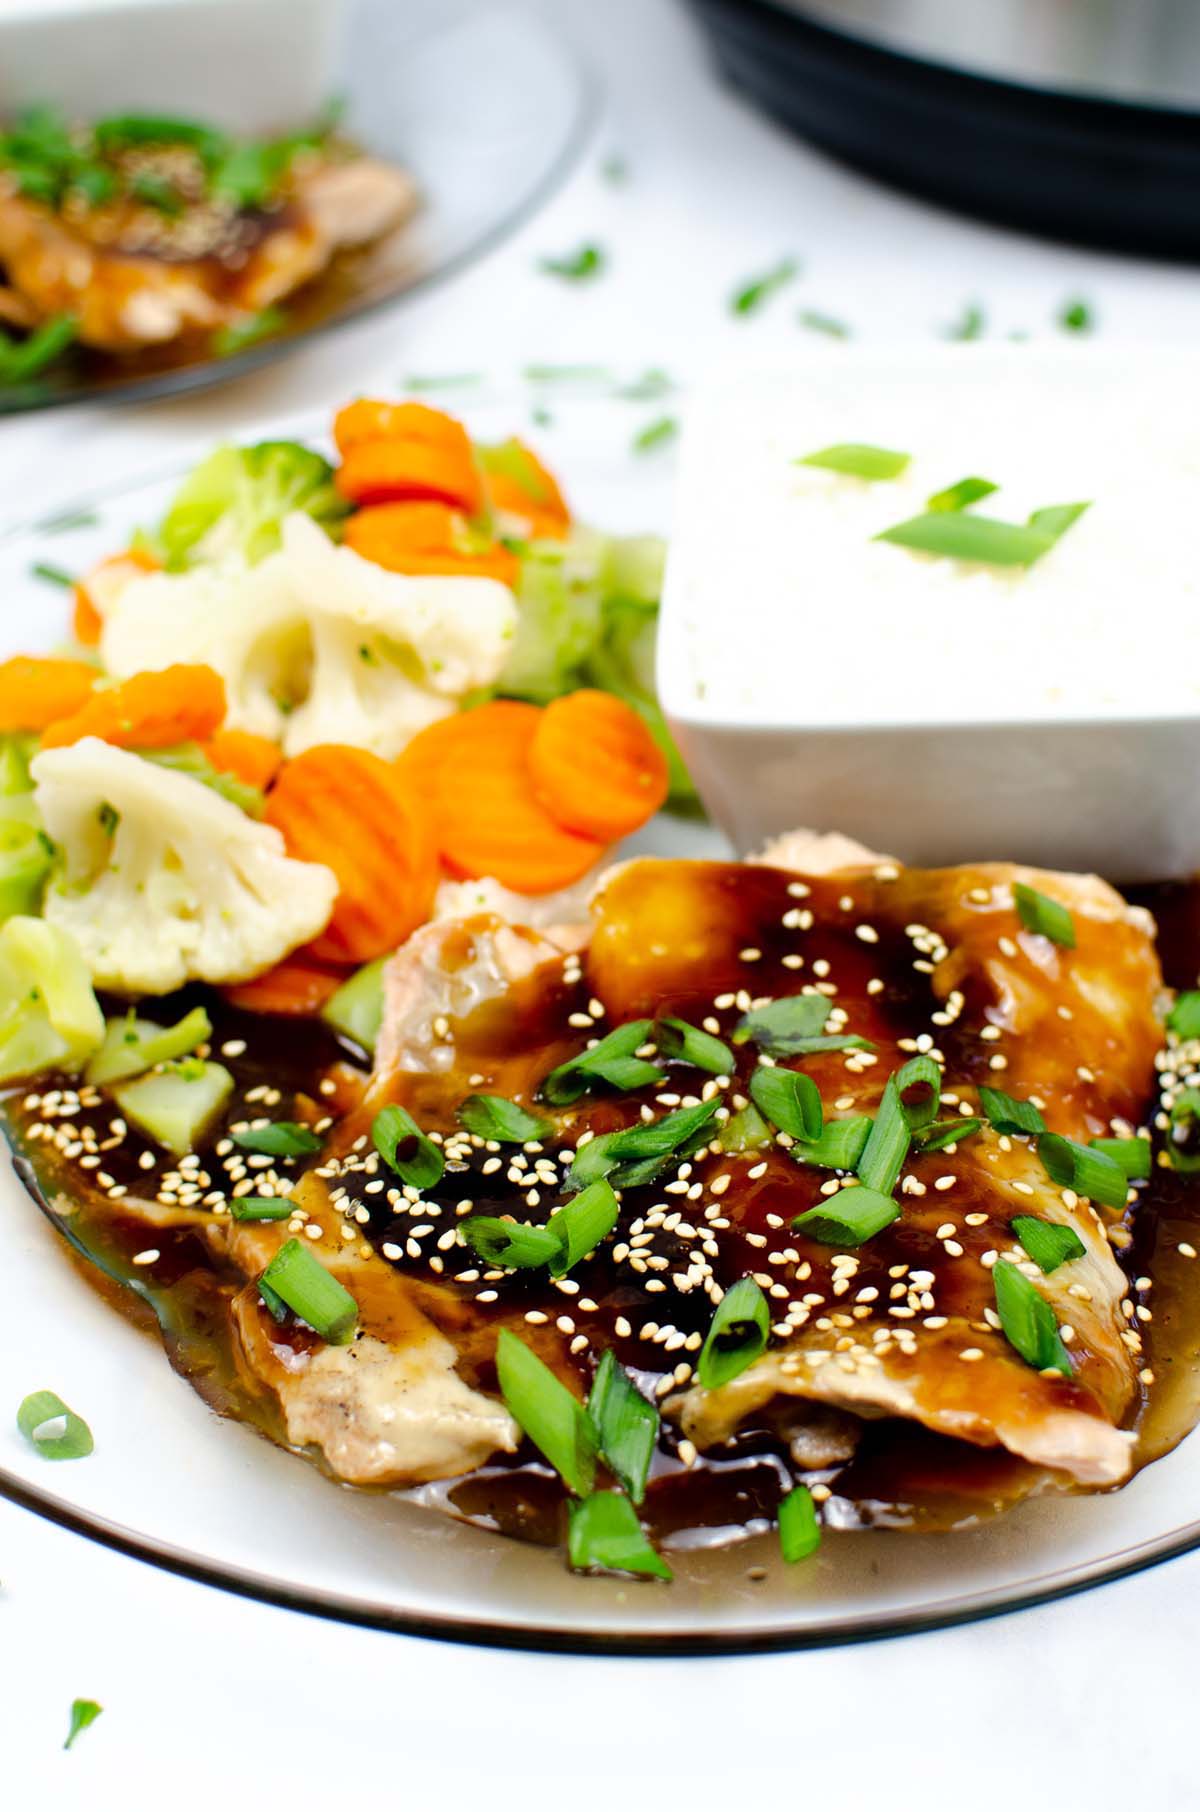 teriyaki salmon, vegetables and rice on a plate.